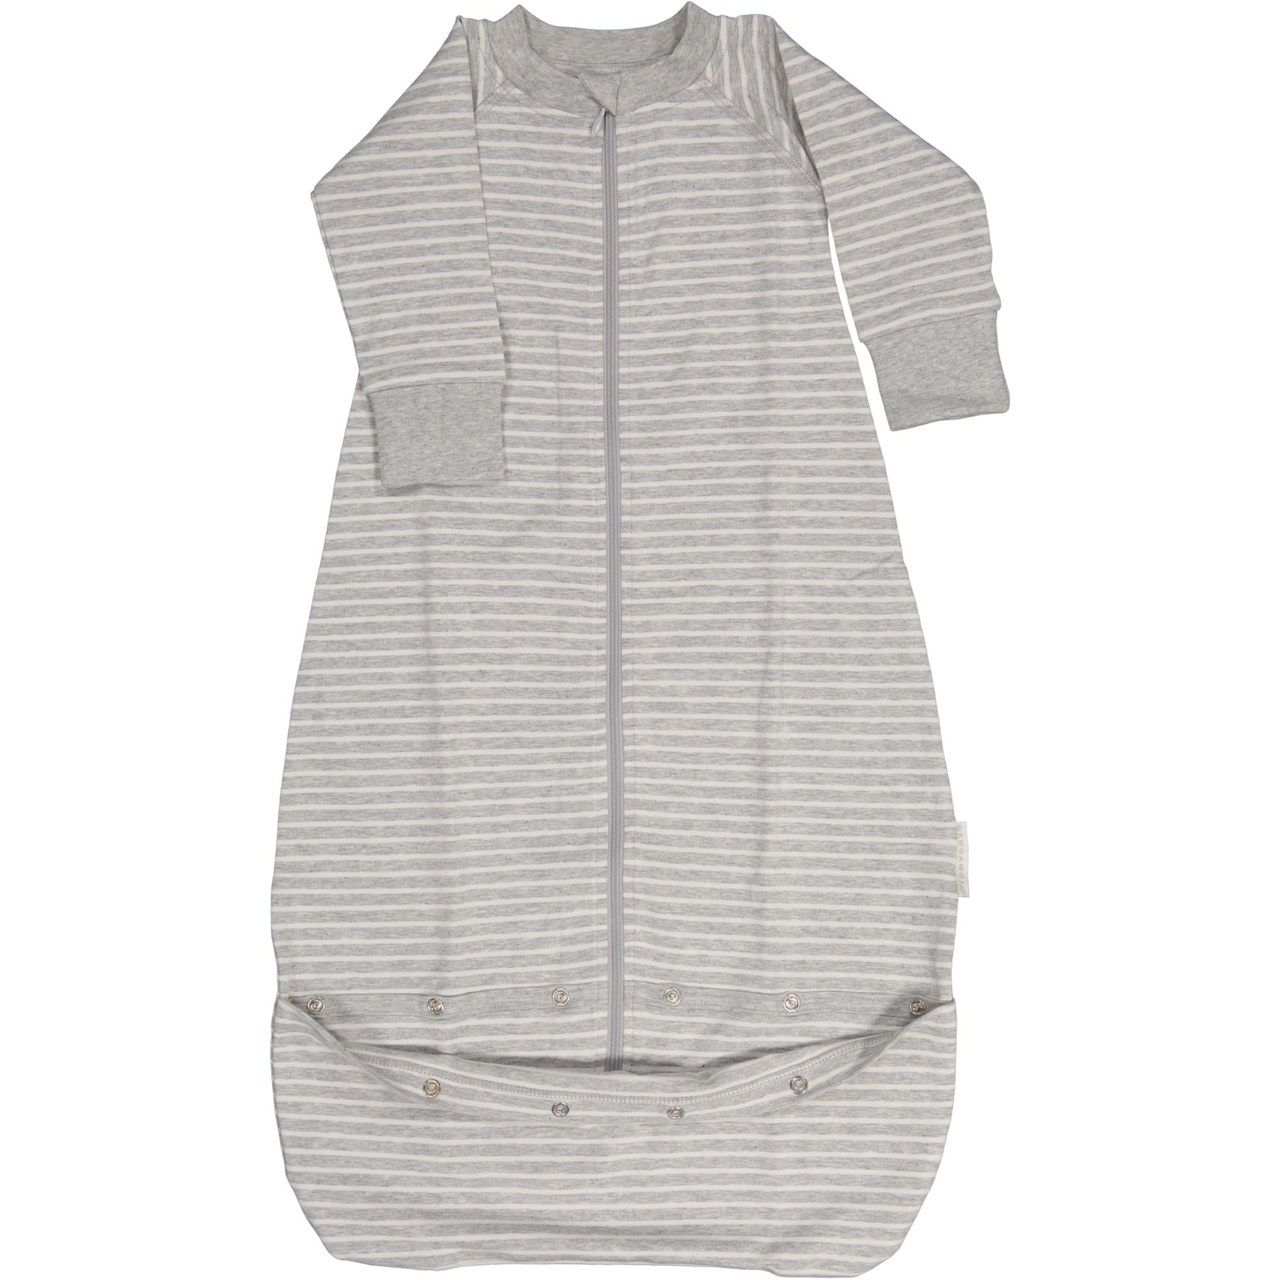 Baby sleep bag Classic Grey mel/white 62/68